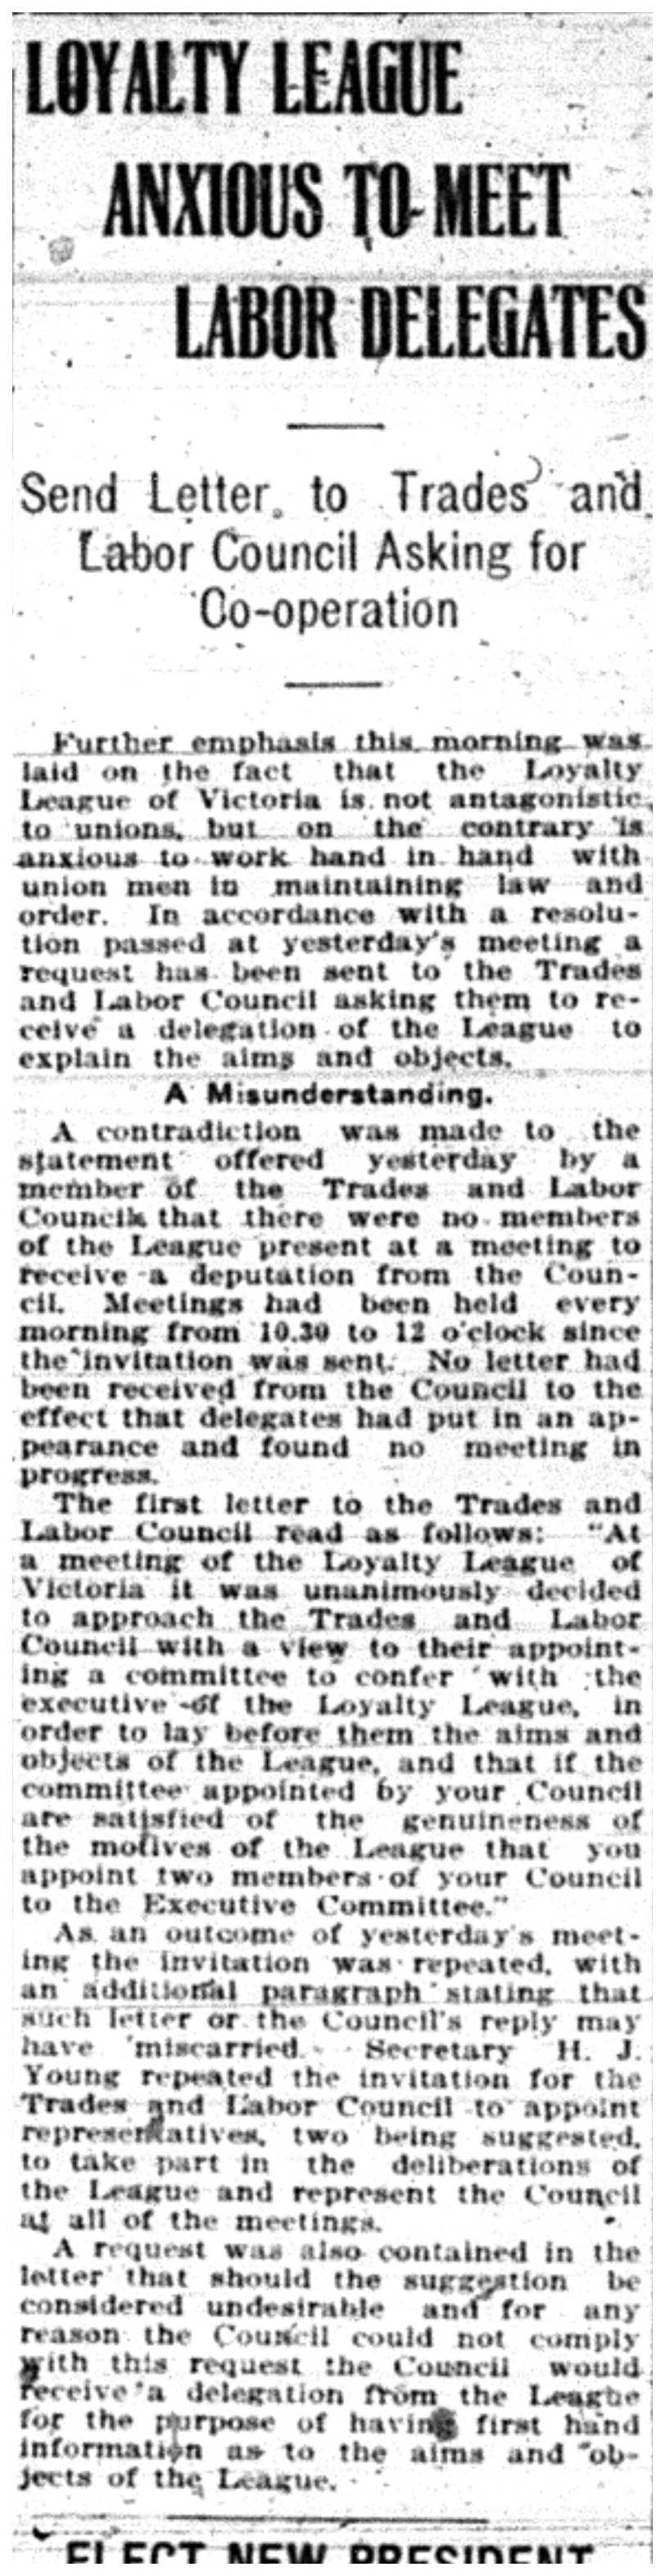 "Loyalty League Anxous to Meet Labor Delegates"